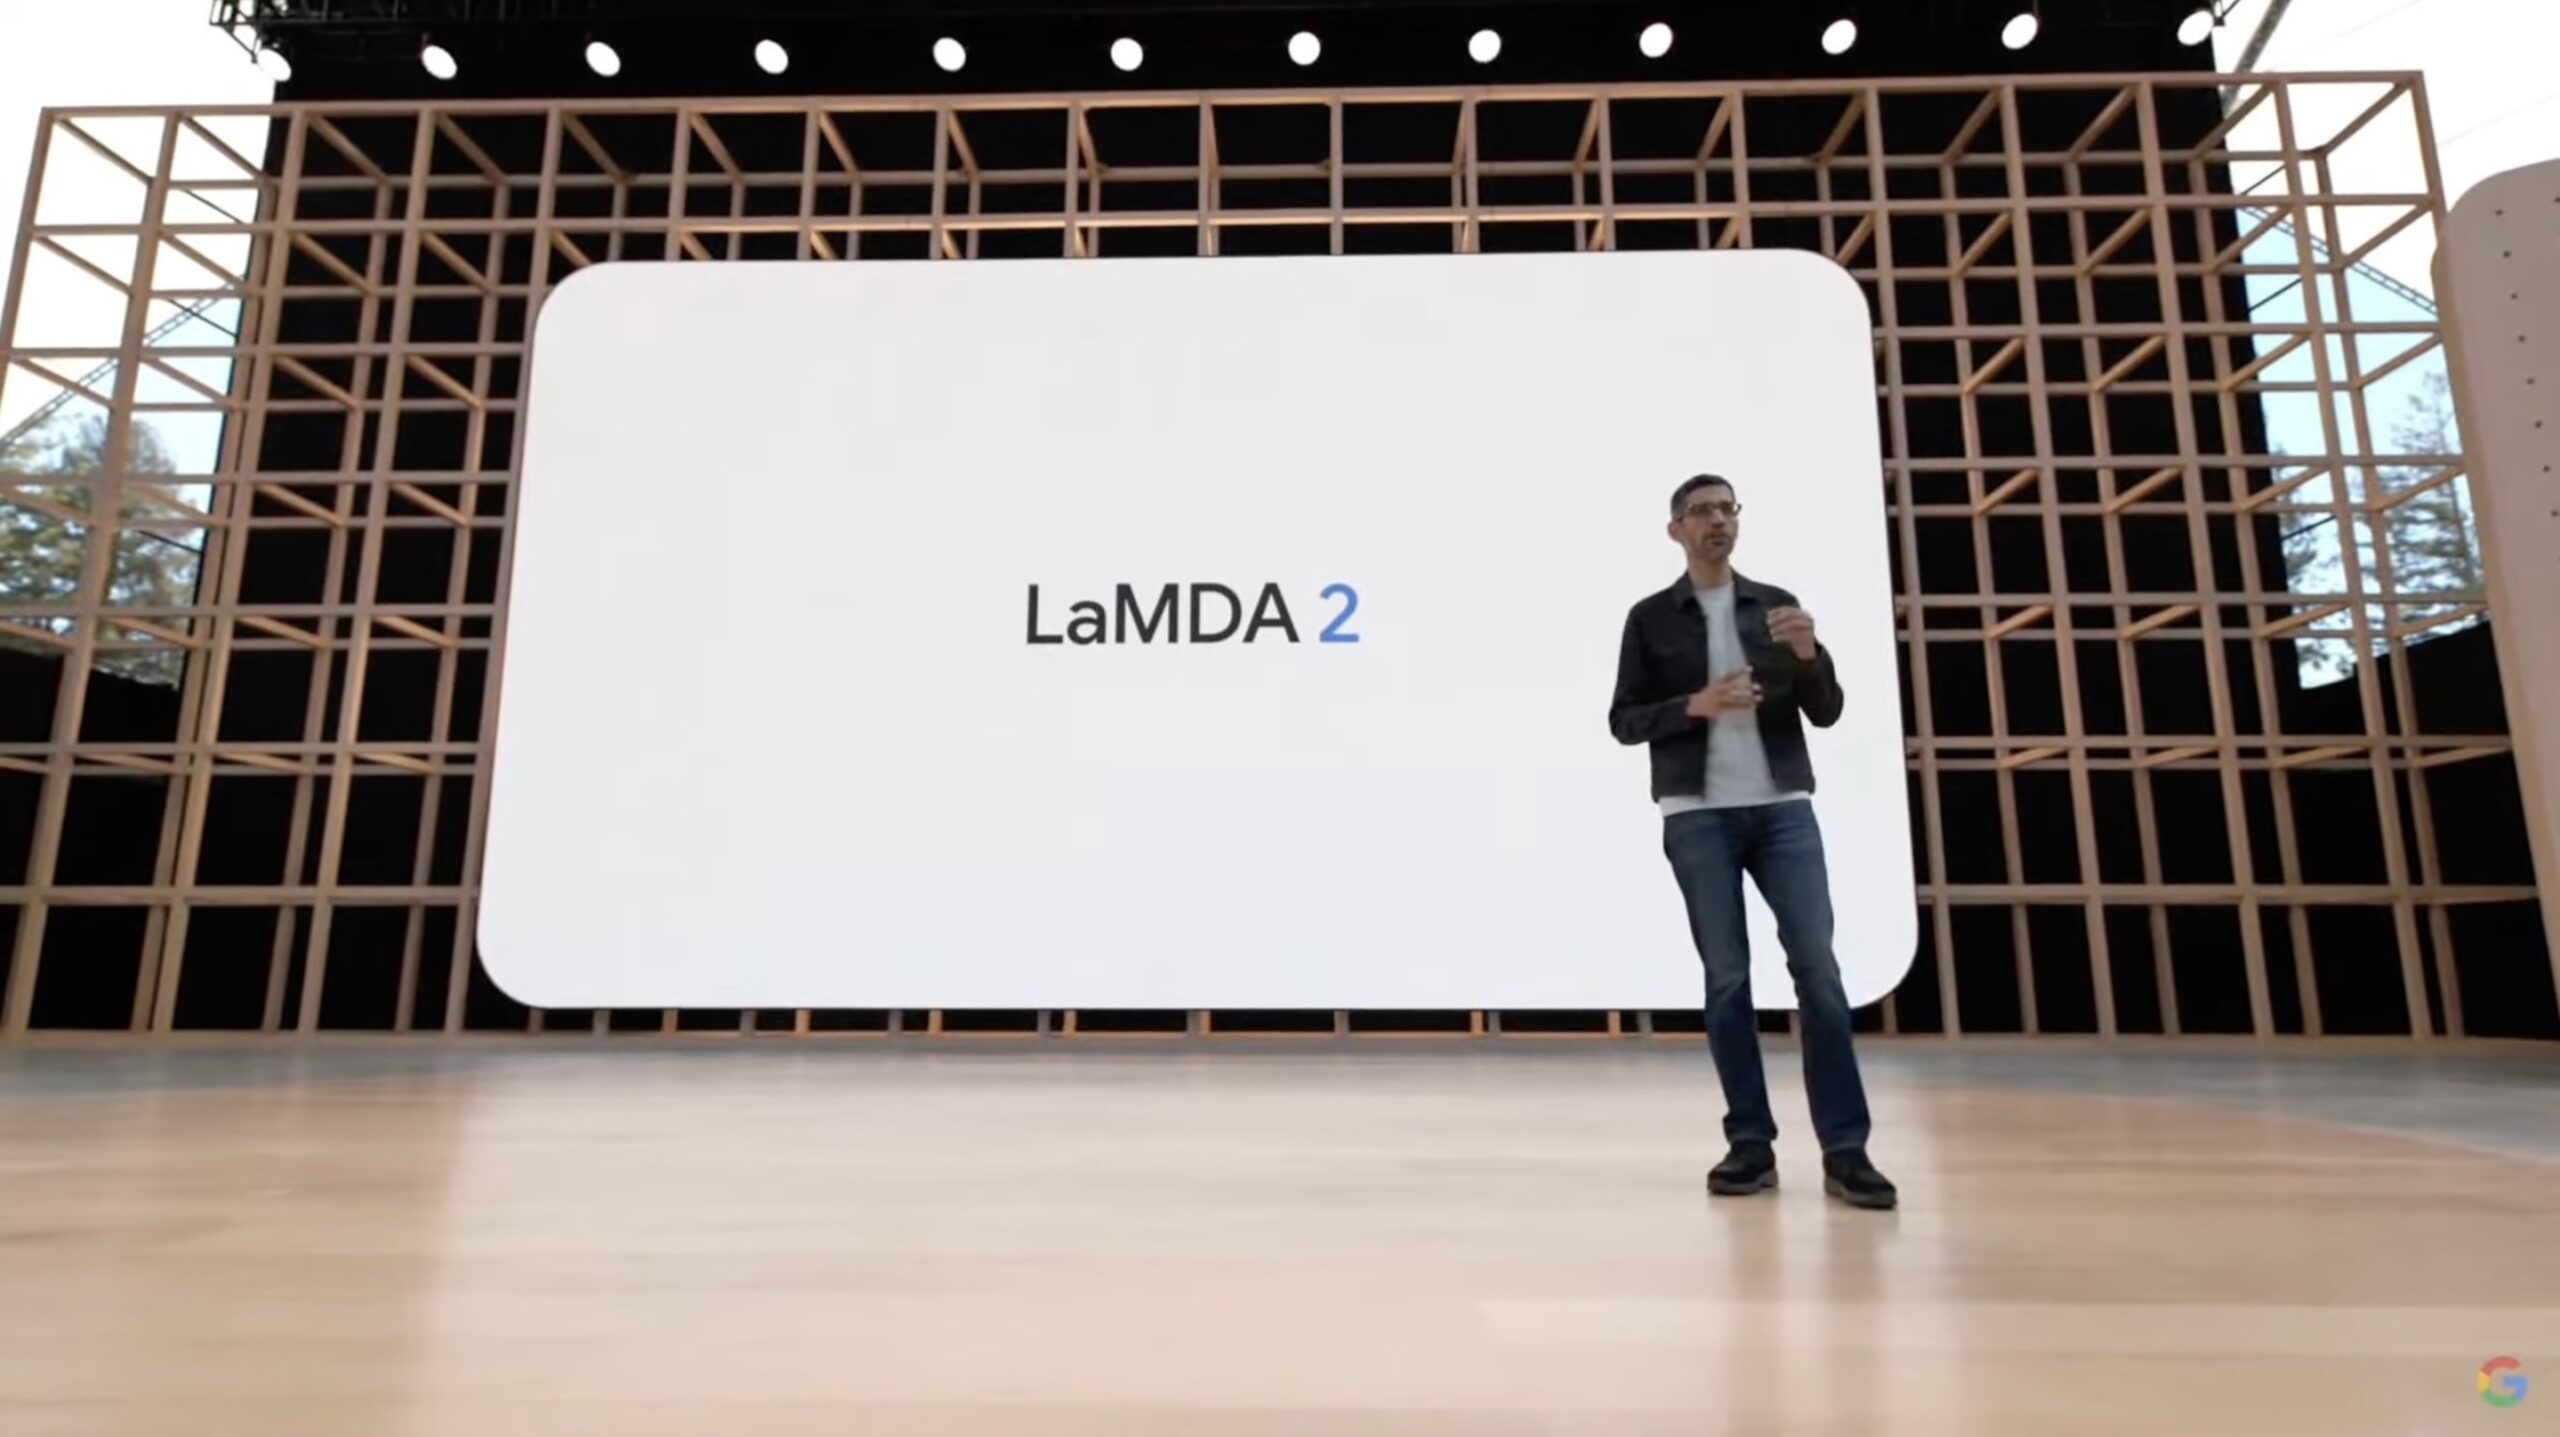 Image source: Hardwarezone.com. At Google I/O 2022, Google CEO Sundar Pichai announced LaMDA 2 KellyOnTech